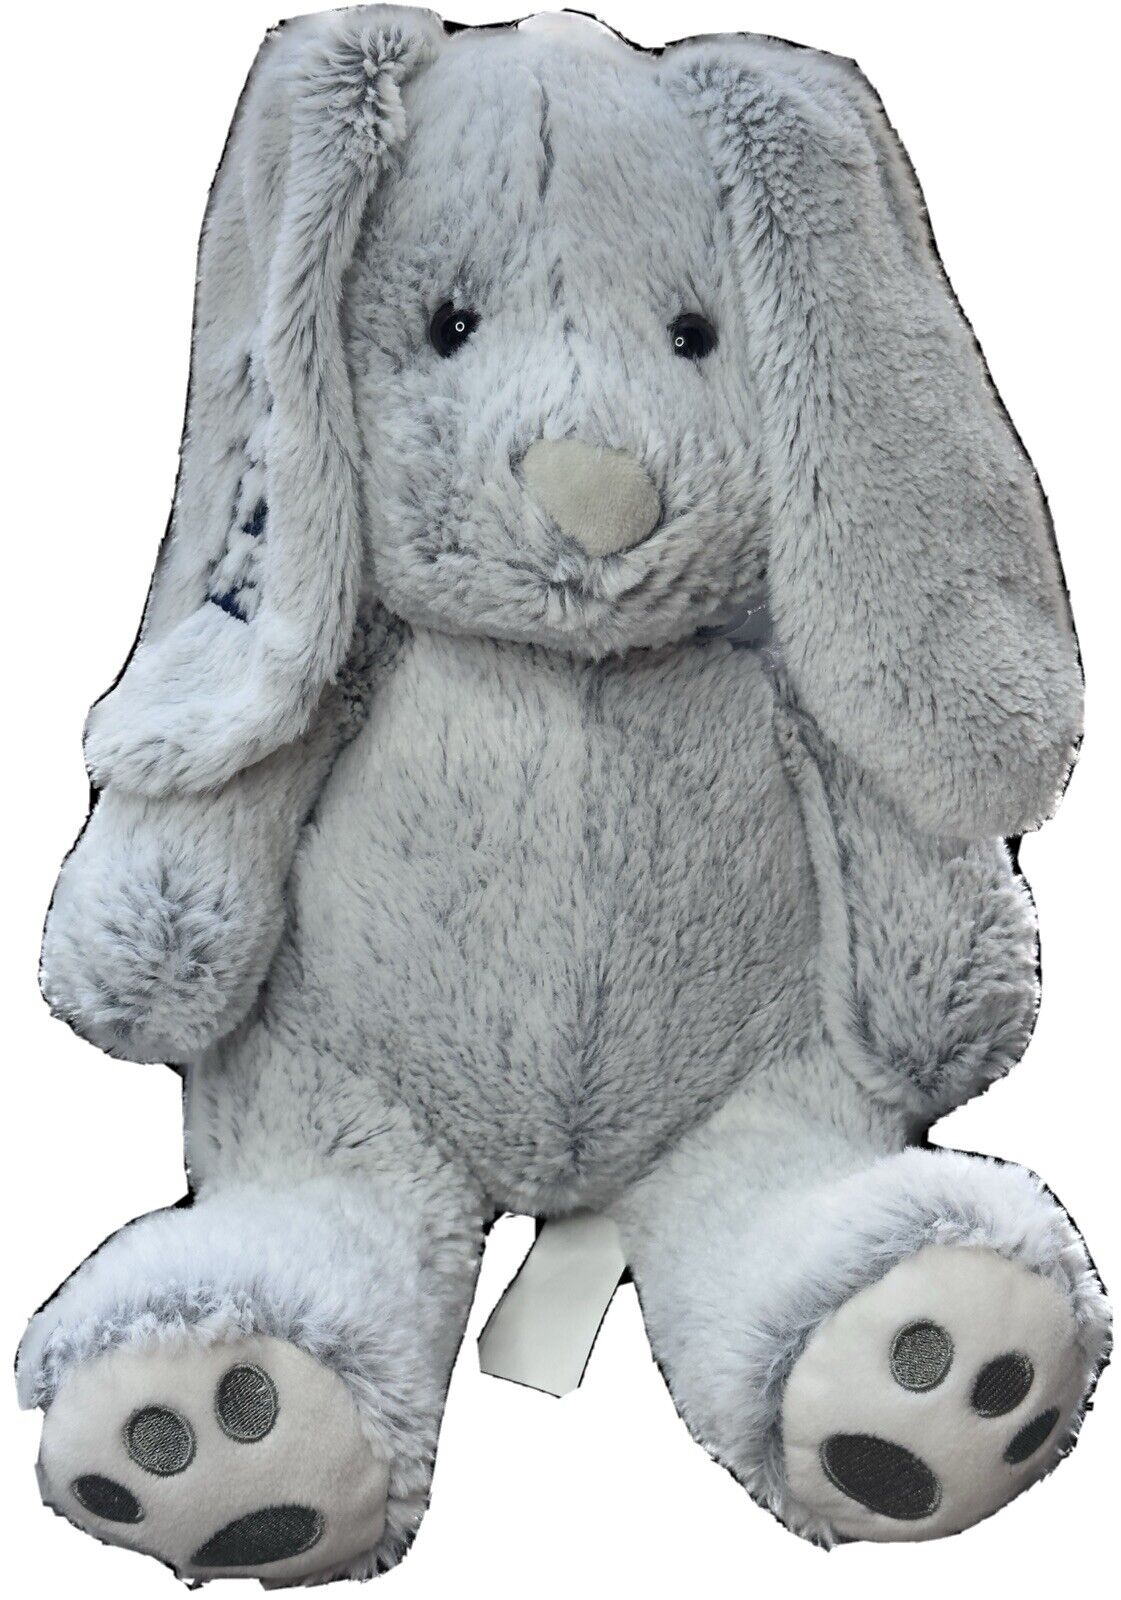 Hug Fun Bunny Rabbit Plush Stuffed Animal Ester Name Engraved On Left Ear M Gray